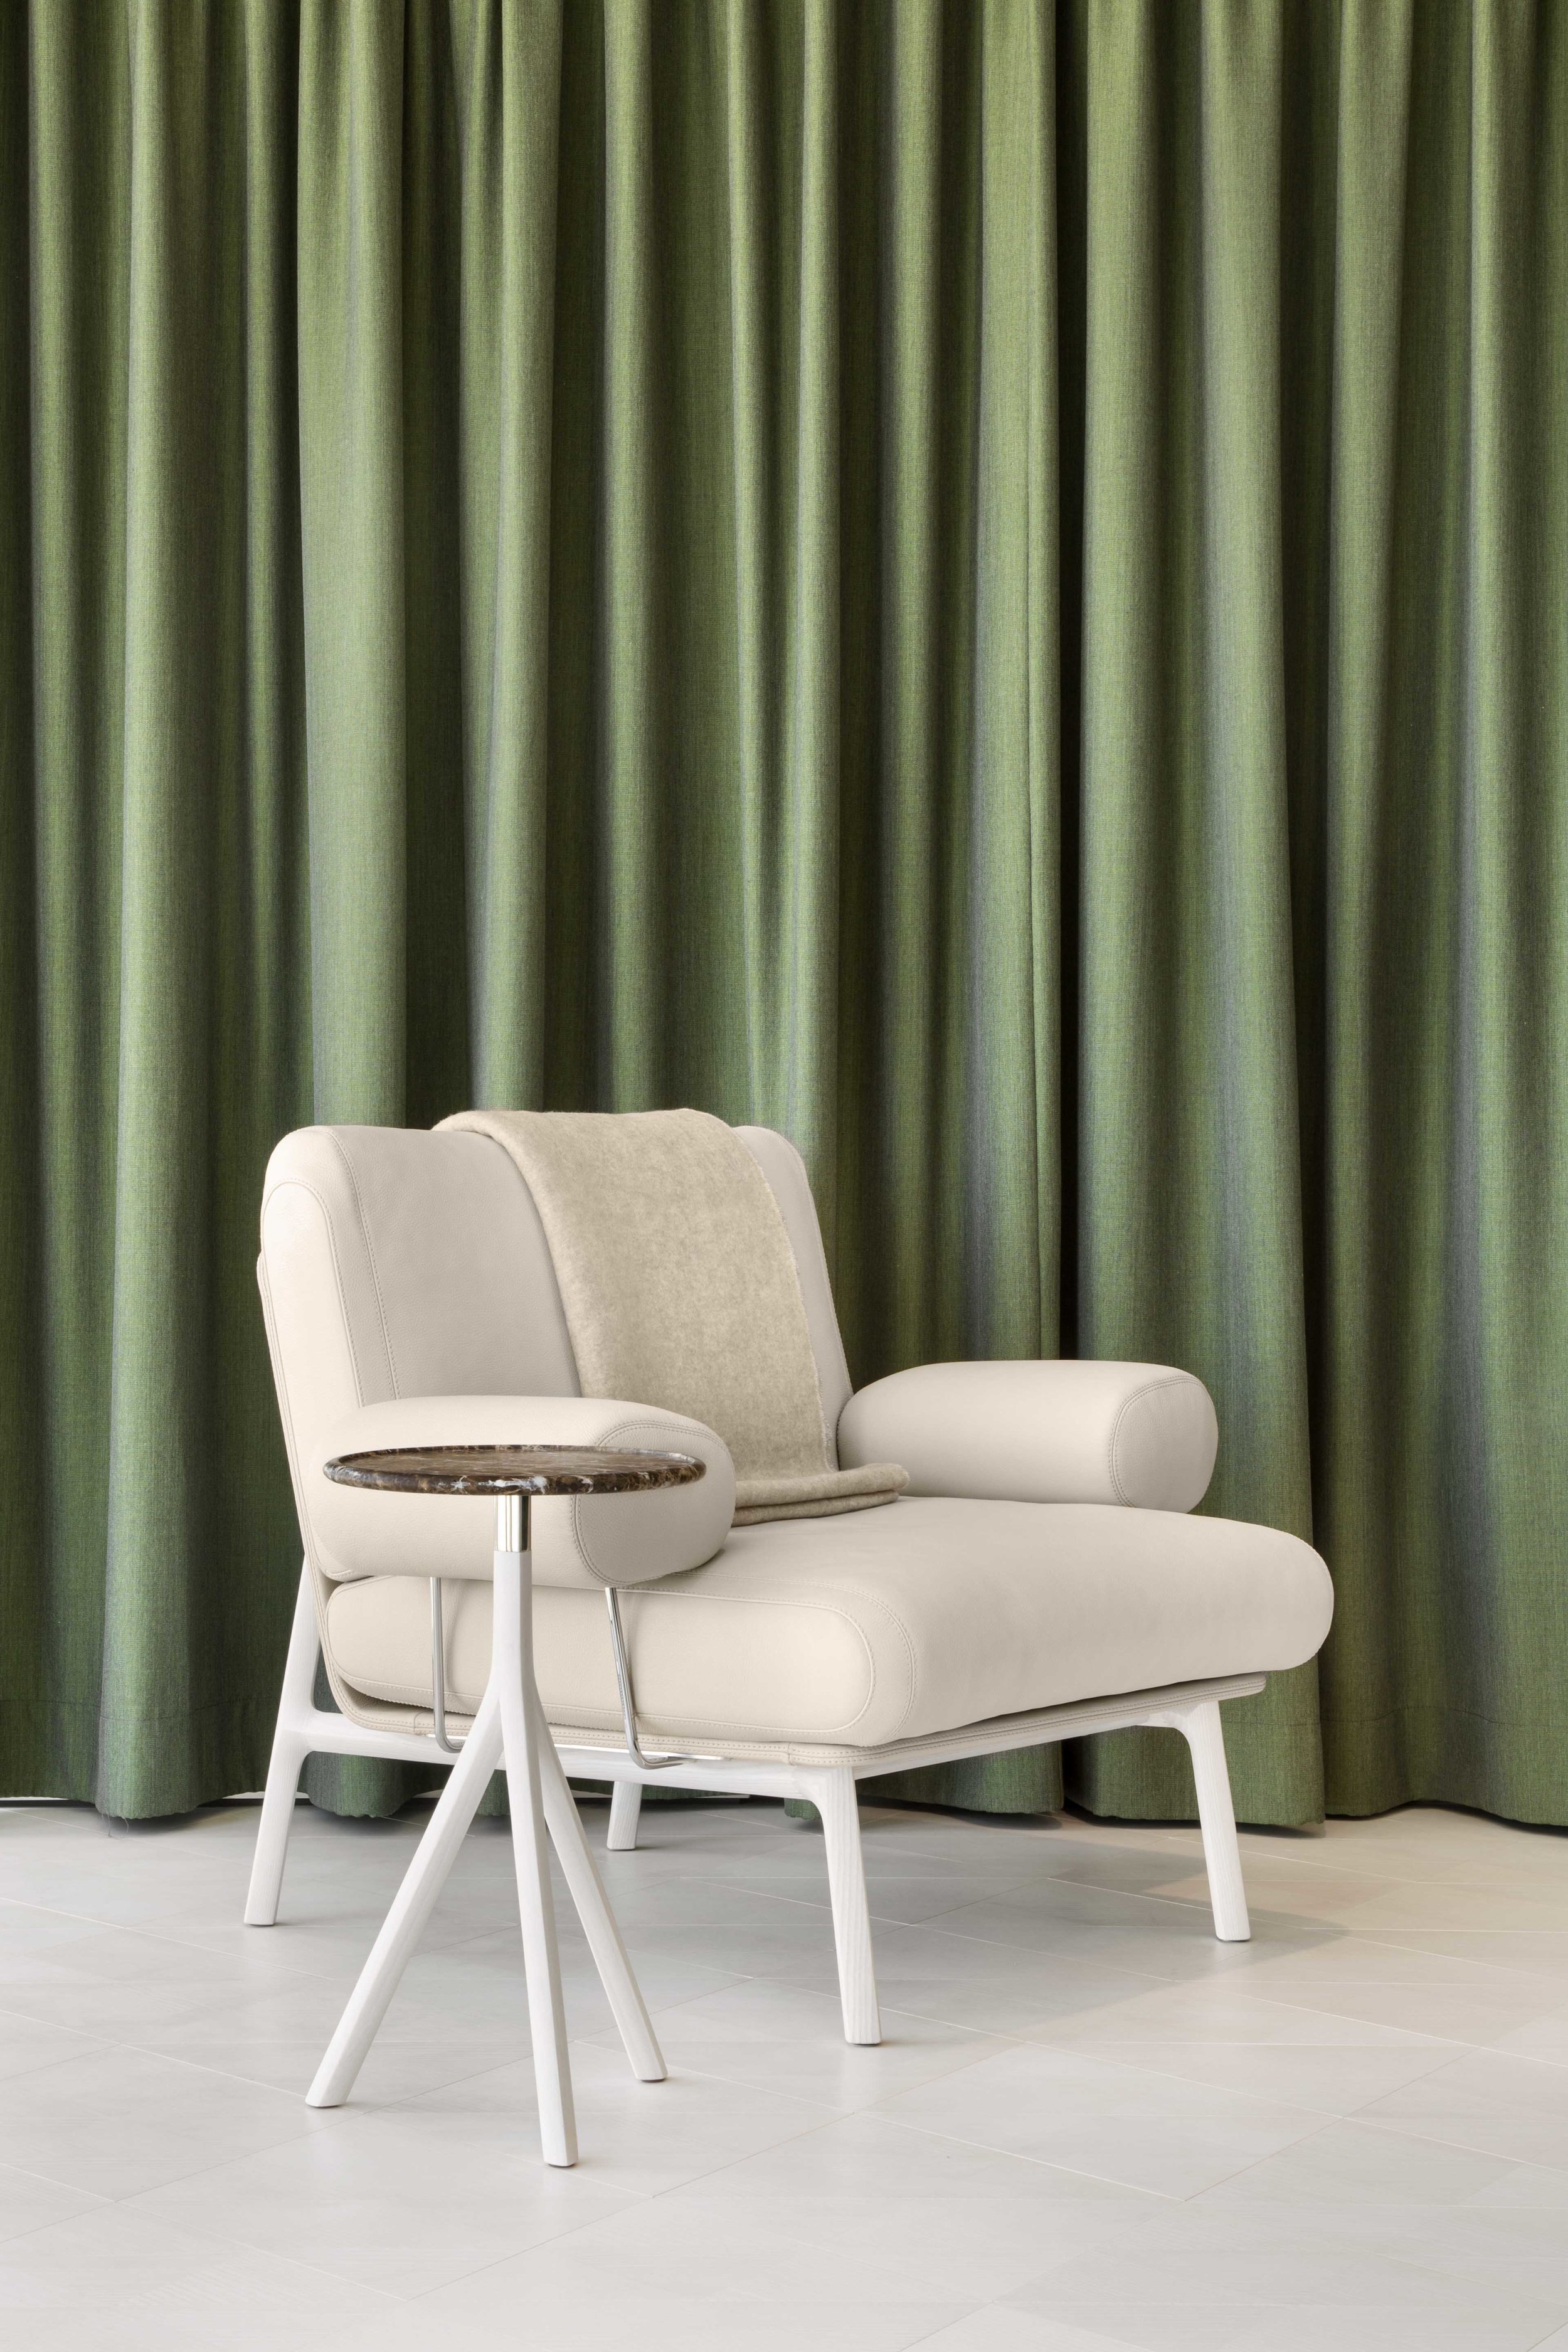 medeo-armchair_furniture-design_coordination-berlin_01.jpg